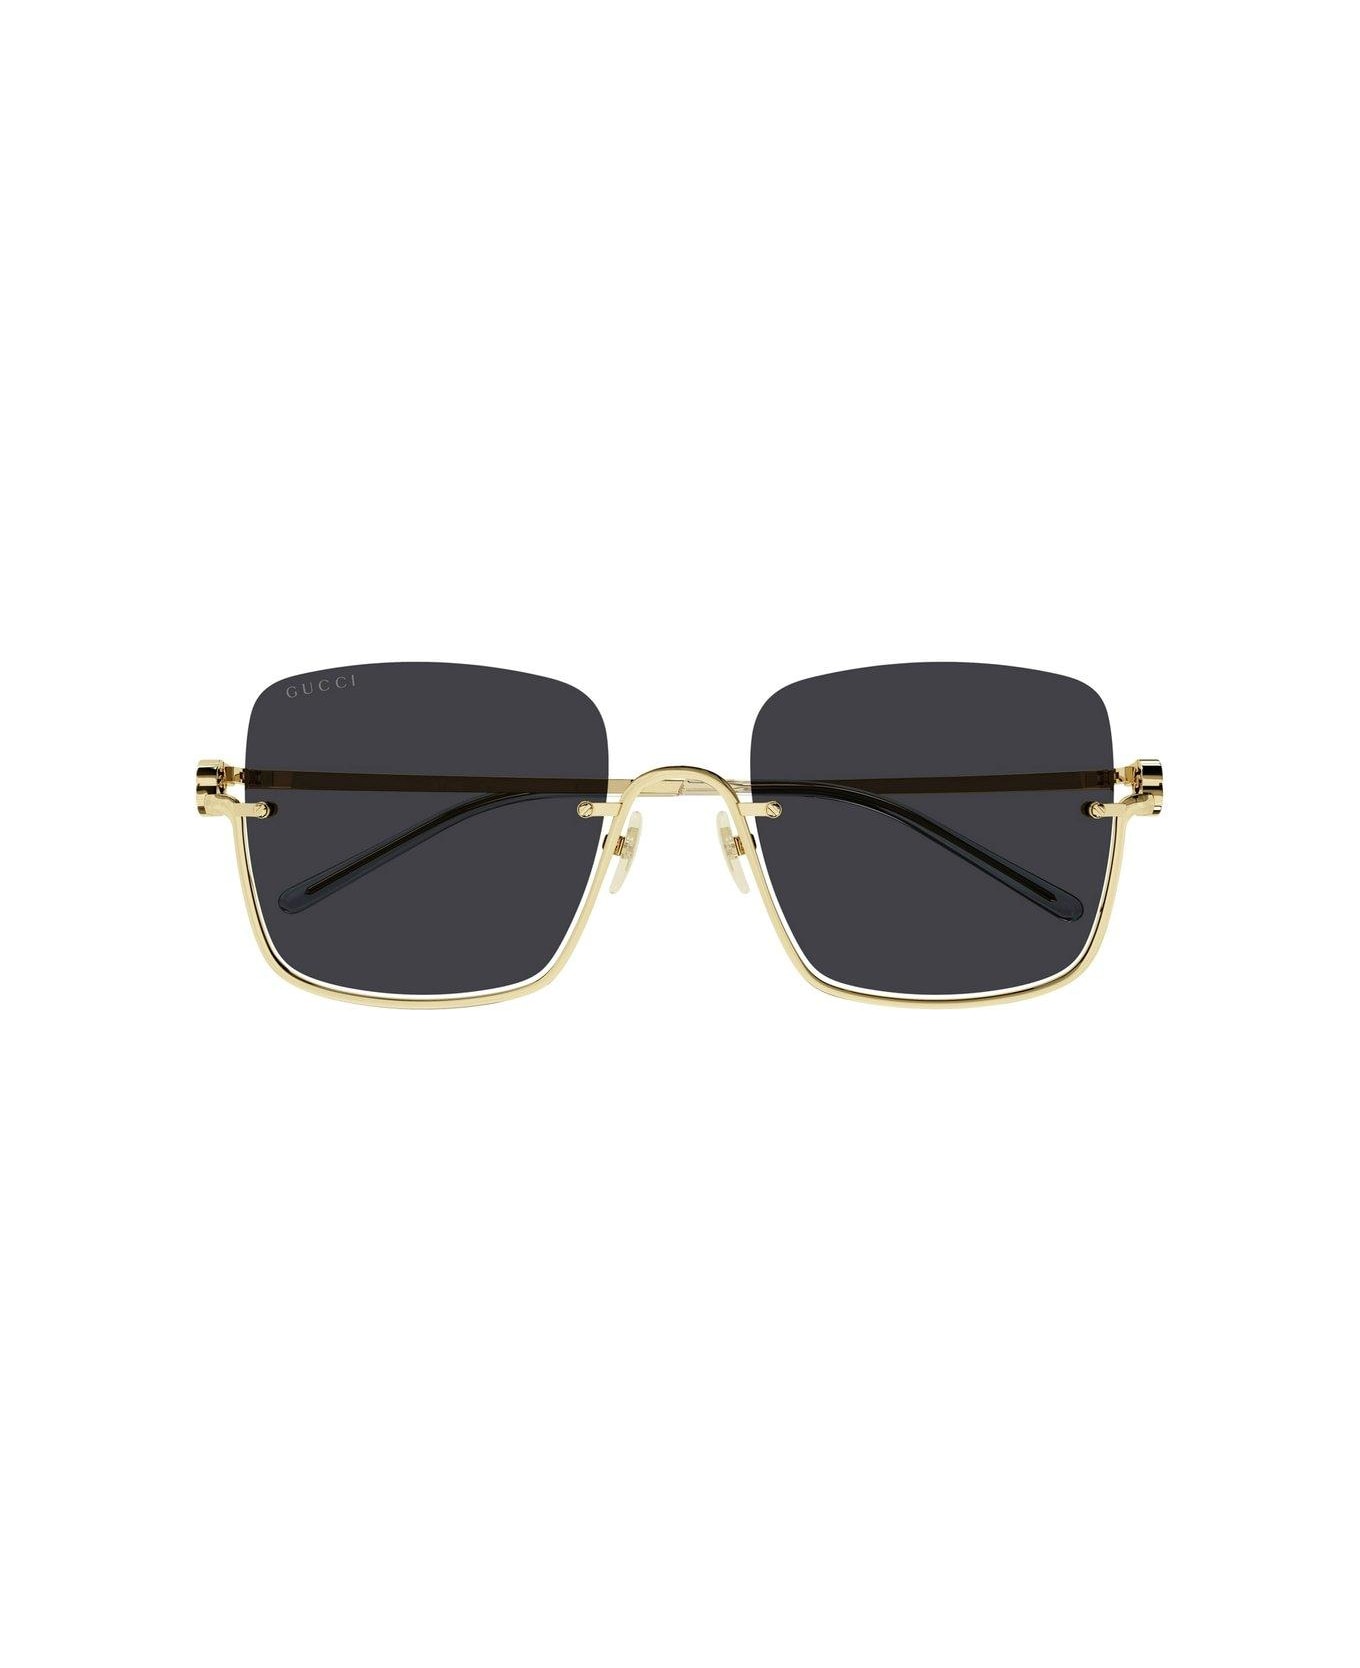 Gucci Eyewear Square Frame Sunglasses Sunglasses - 001 GOLD GOLD GREY